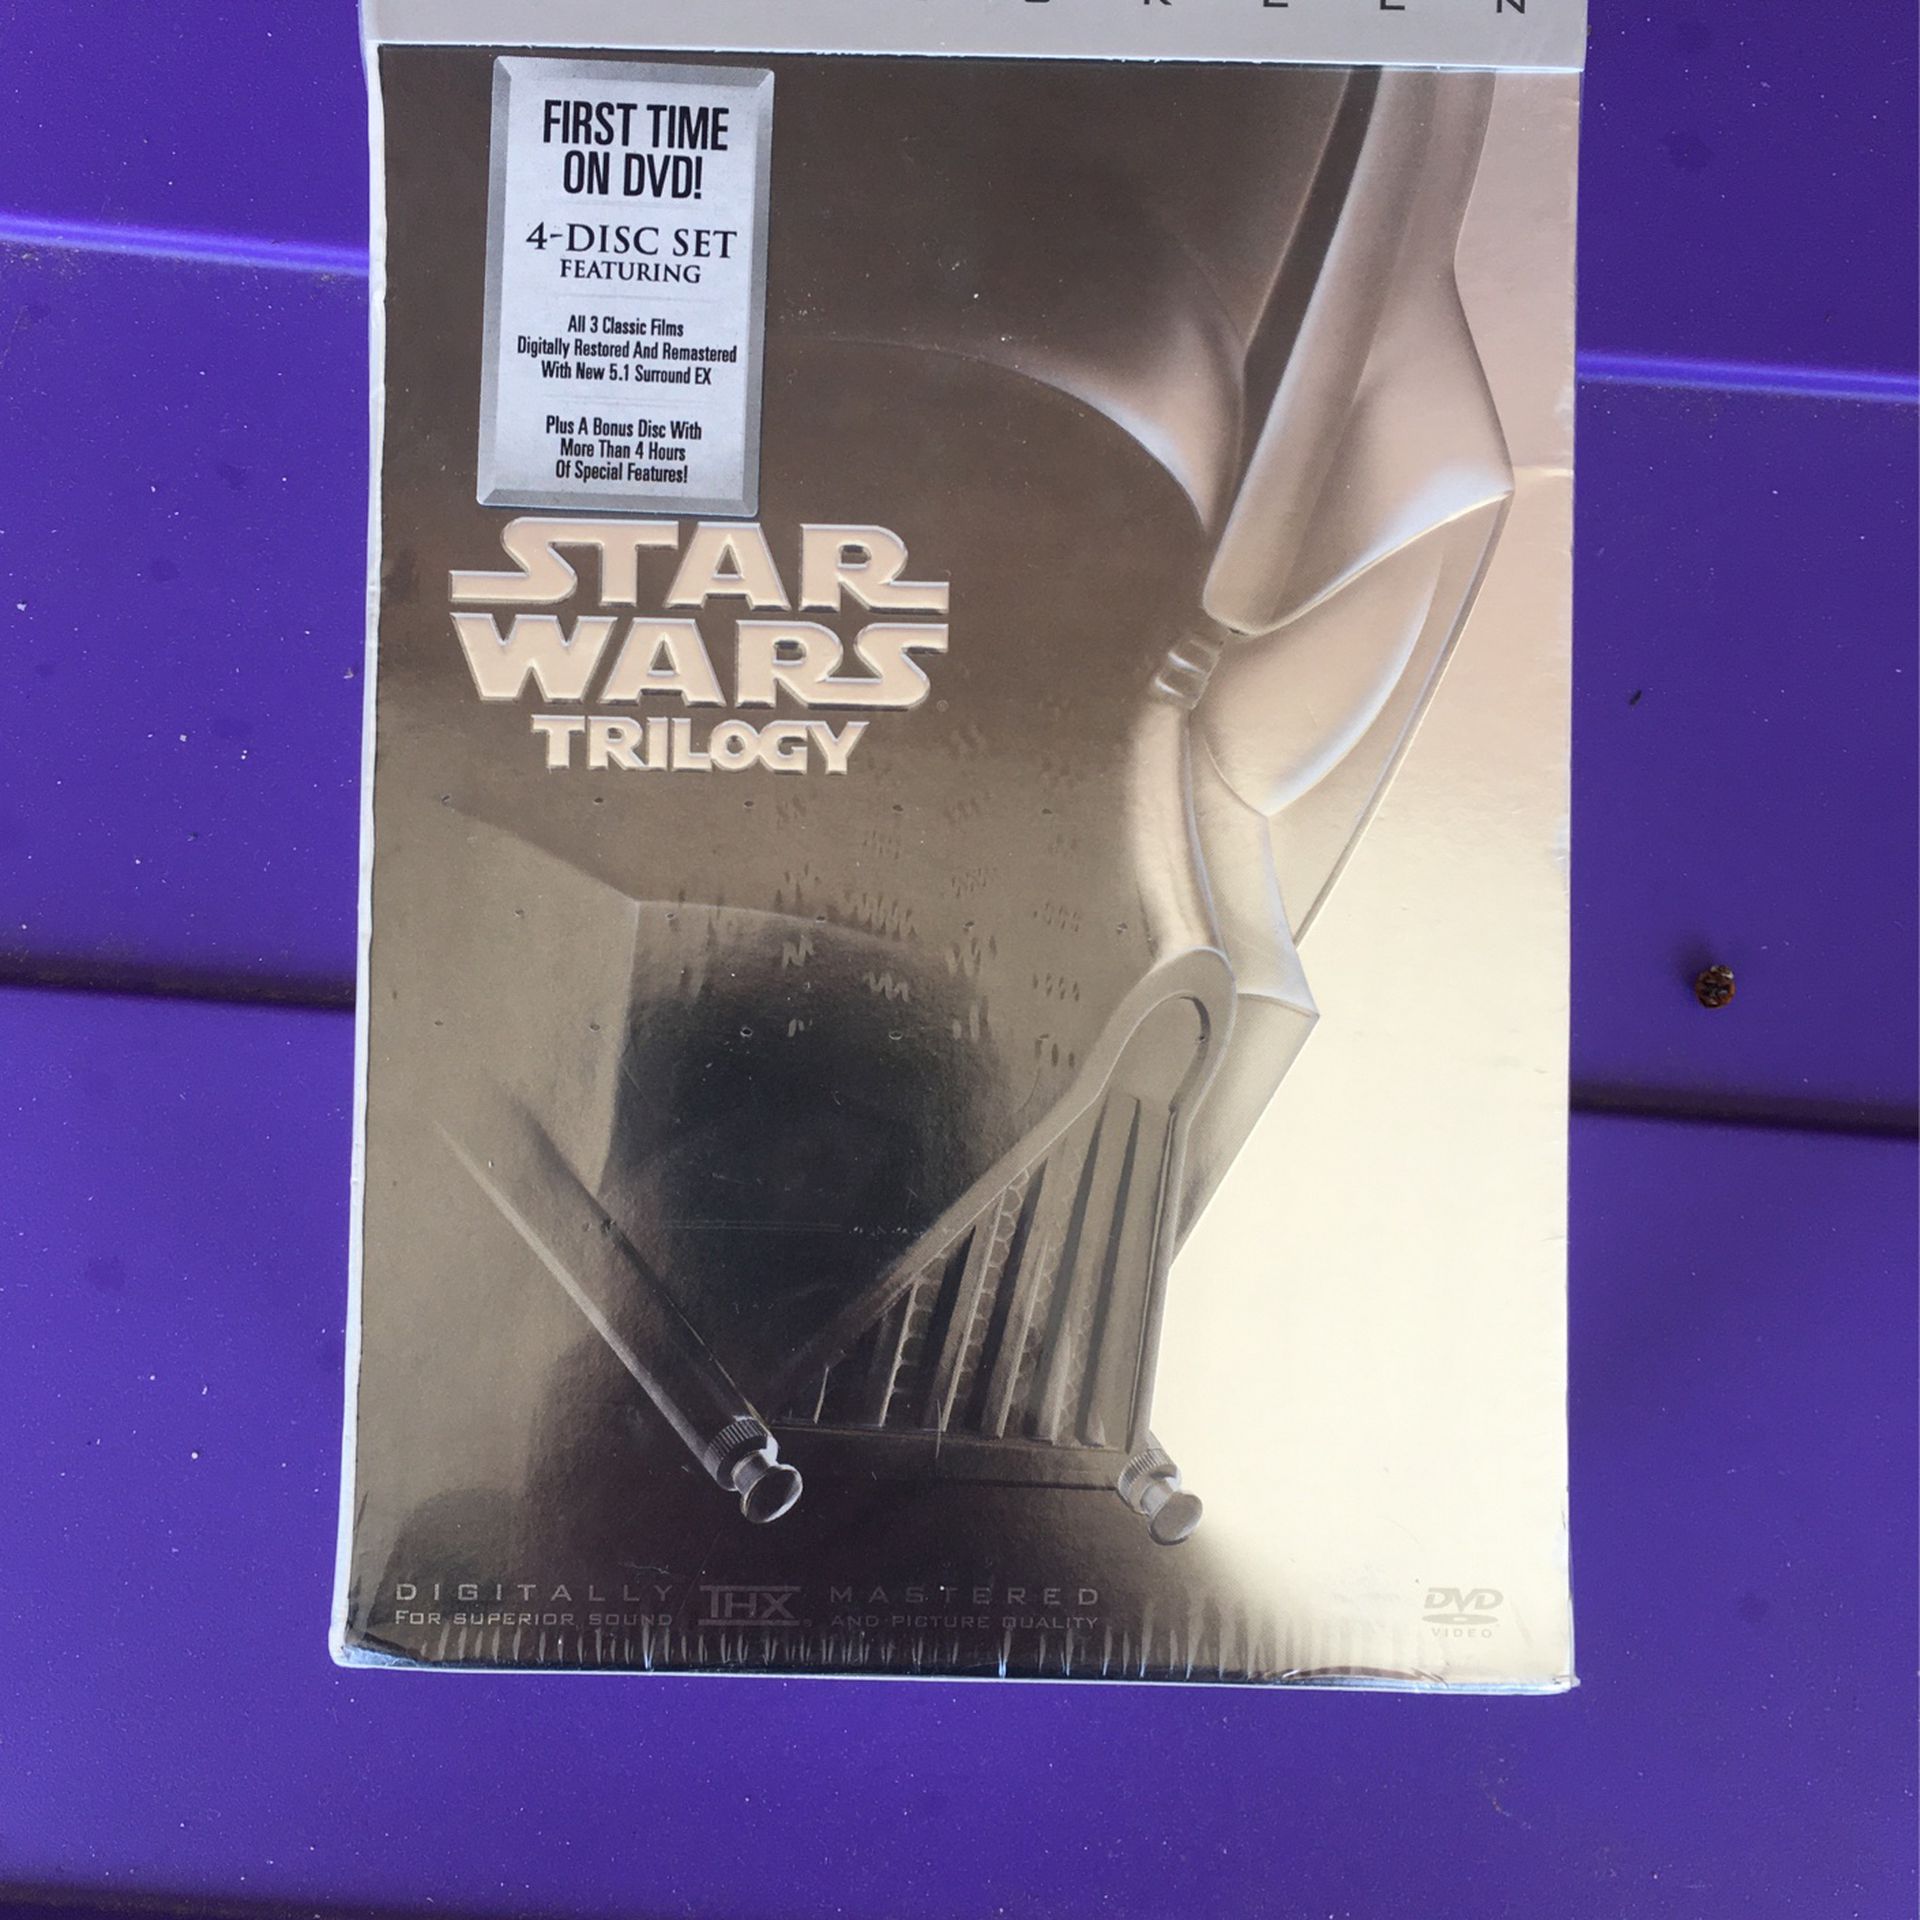 Star Wars Trilogy plus a bonus disc.